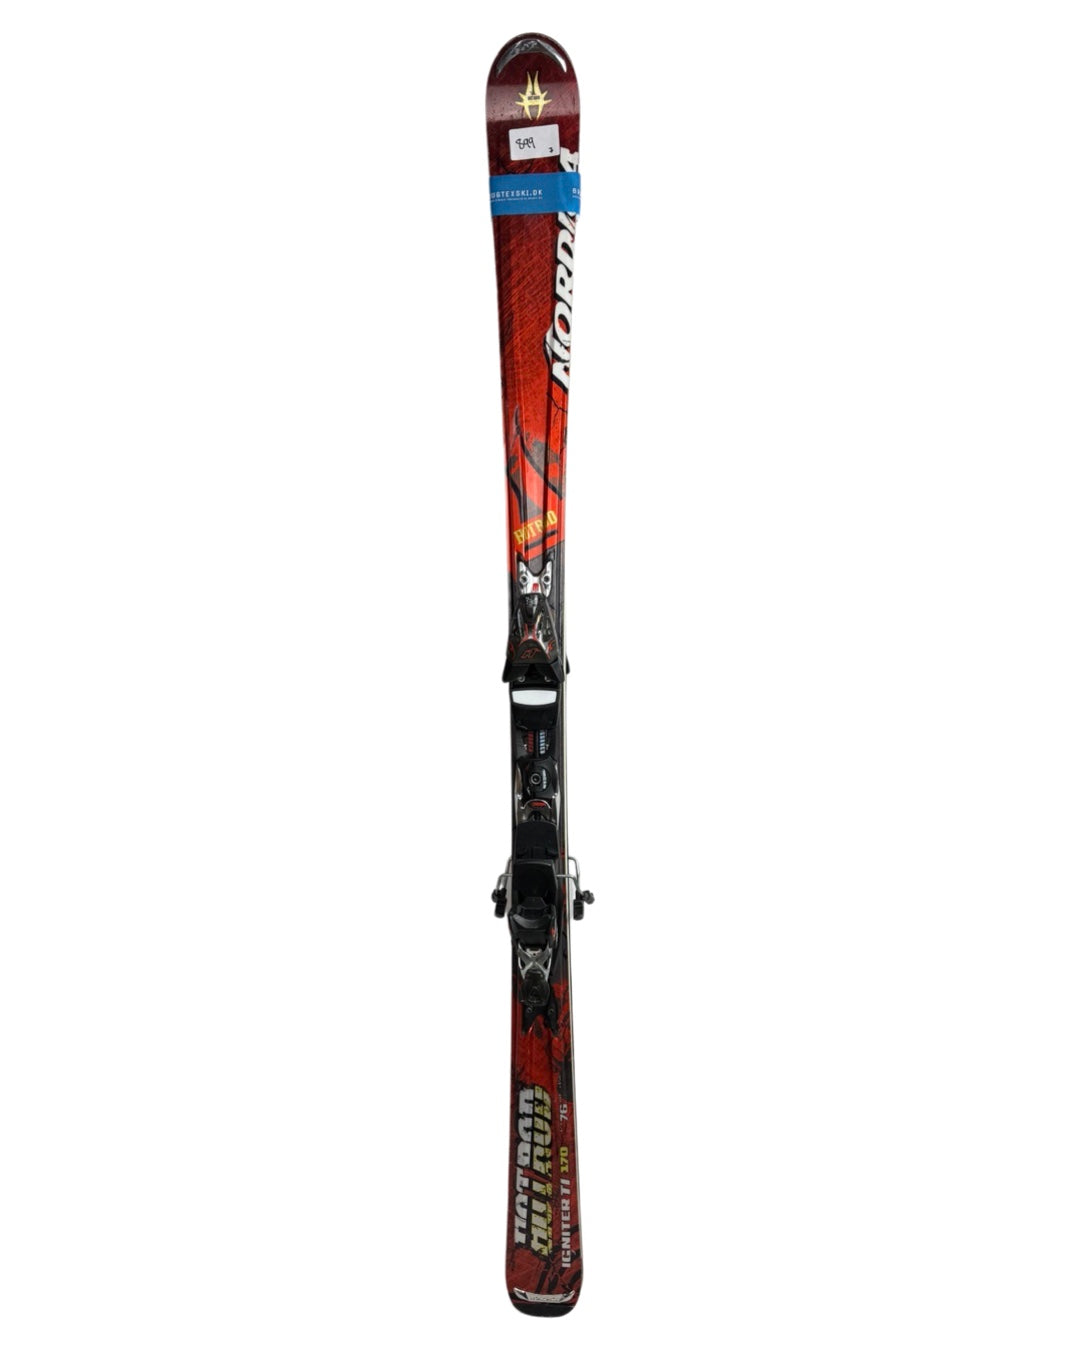 Voksen ski - blandet 899